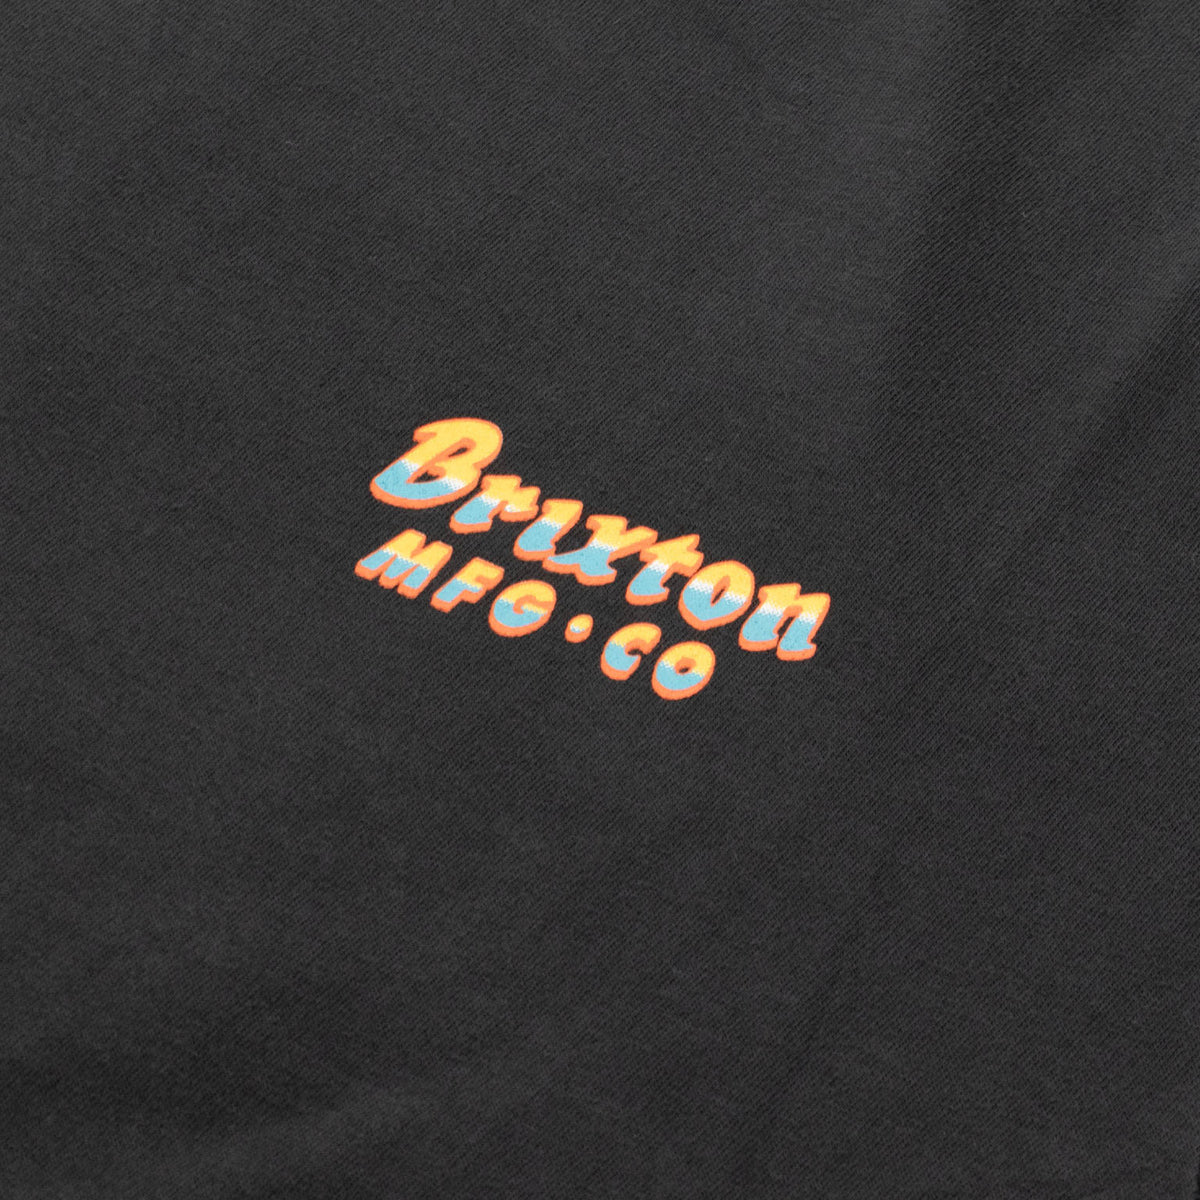 BRIXTON DISTRICT S/S STT ヴィンテージ感 BLACK WORN WASH 100%綿 Tシャツ (16911)